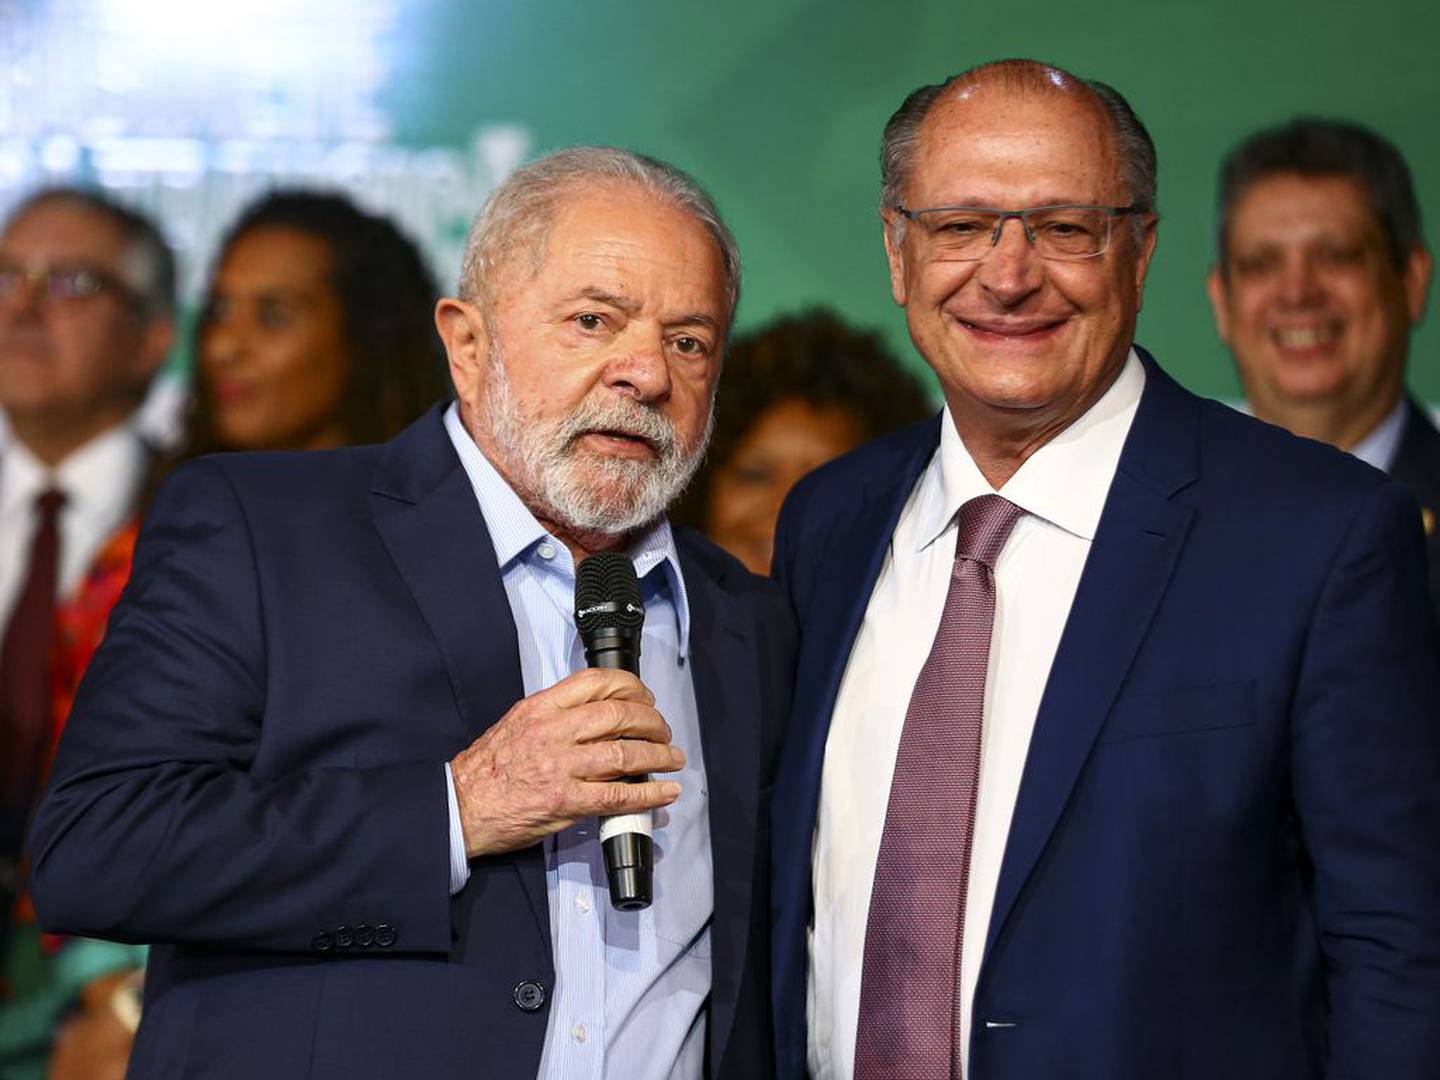 Luiz Inácio Lula da Silva and Geraldo Alckmin take office this Sunday (January 1), for a four-year term as president and vice-president of Brazil